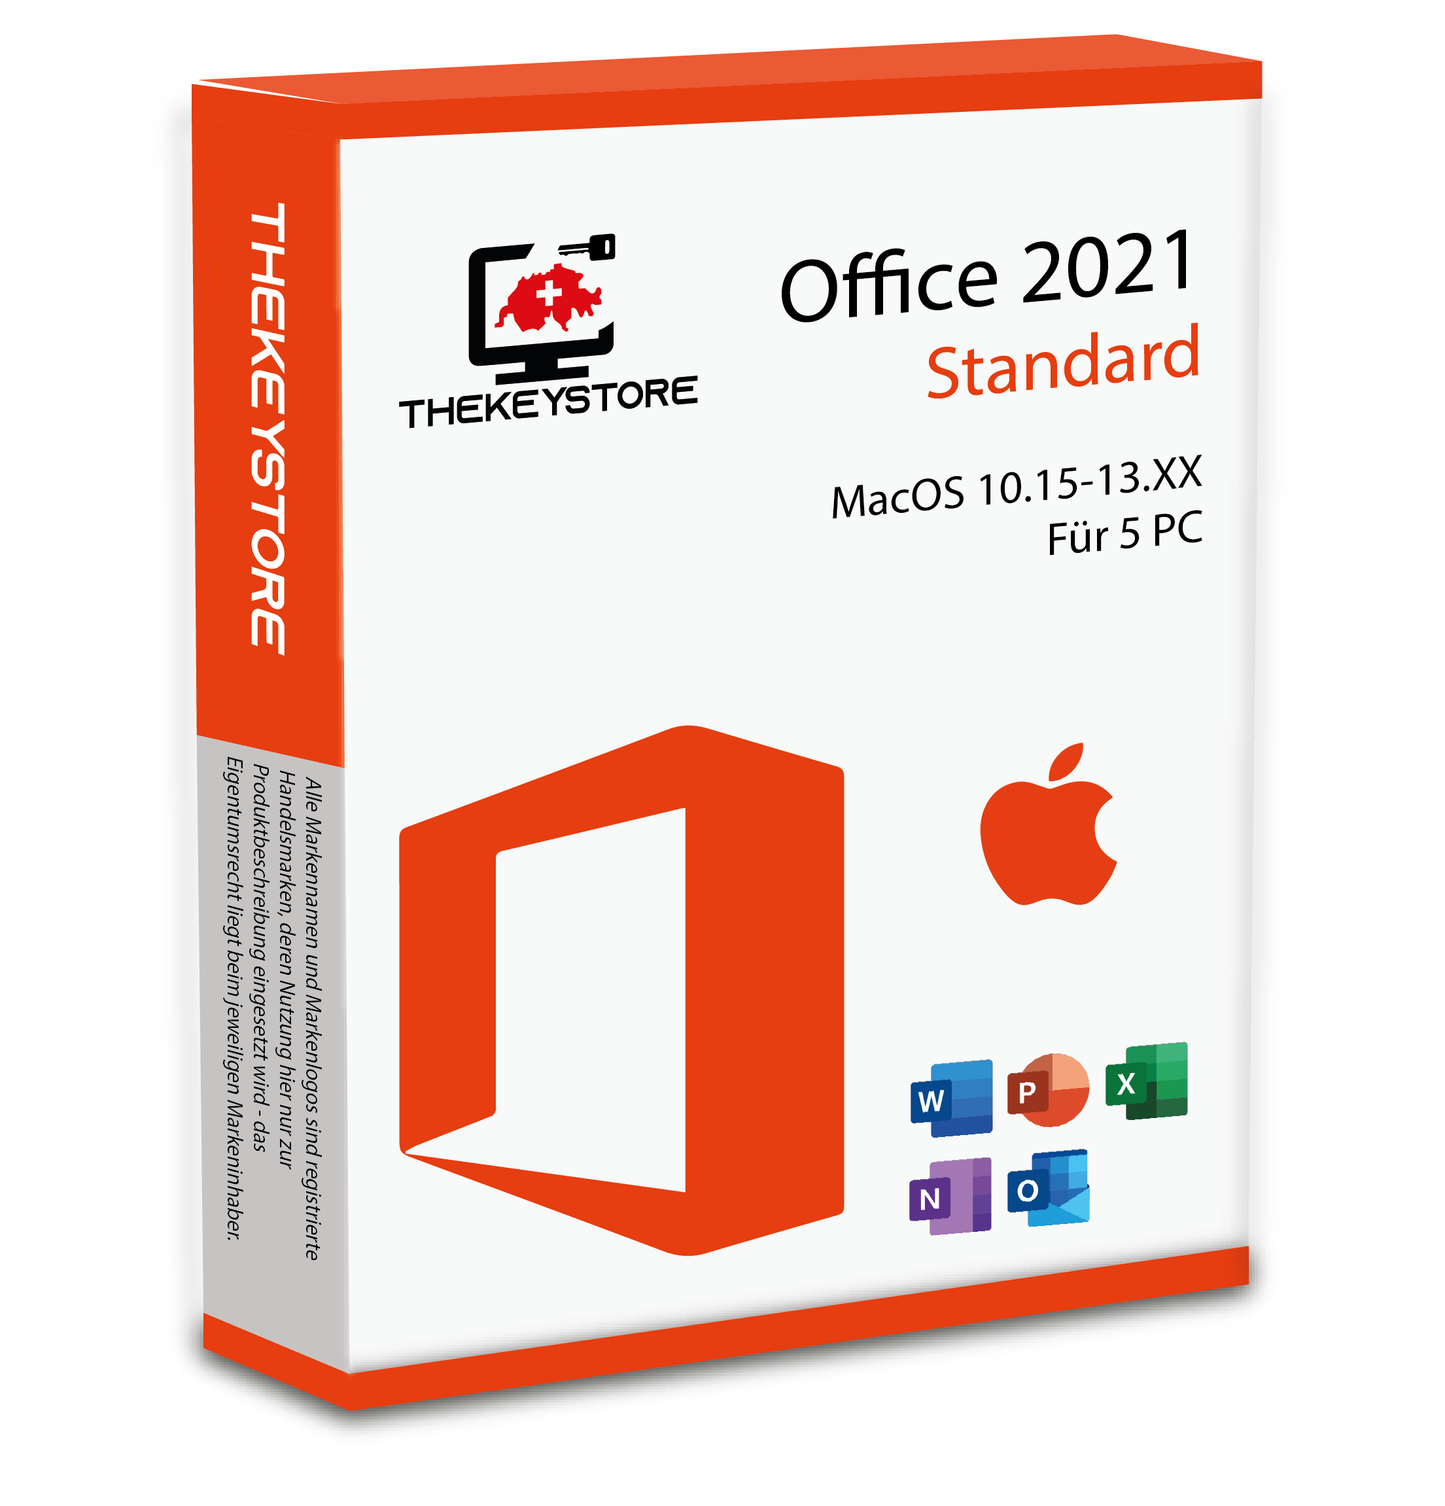 Microsoft Office 2021 Standard MacOS 10.15-13.XX - Für 5 PC - TheKeyStore Schweiz